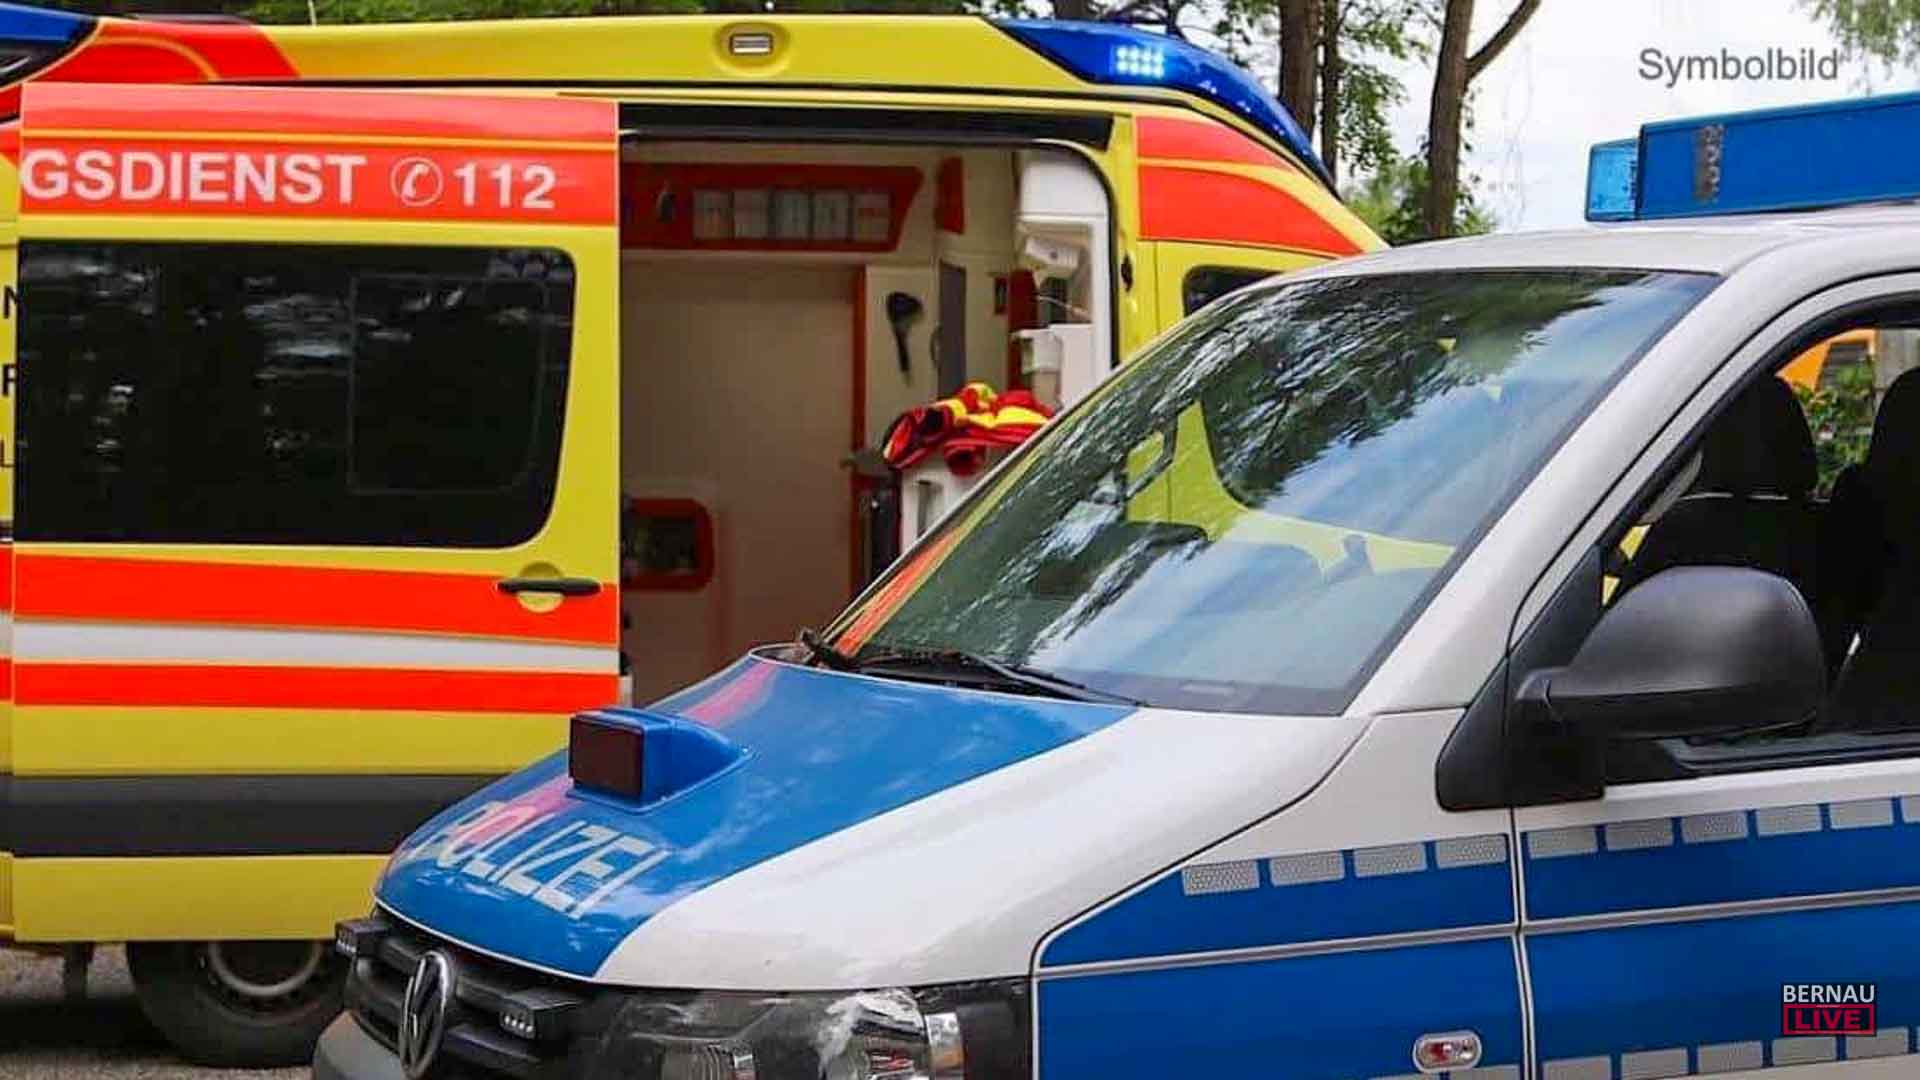 Bernau: Trotz Reanimationsmaßnahmen durch Passanten leider verstorben